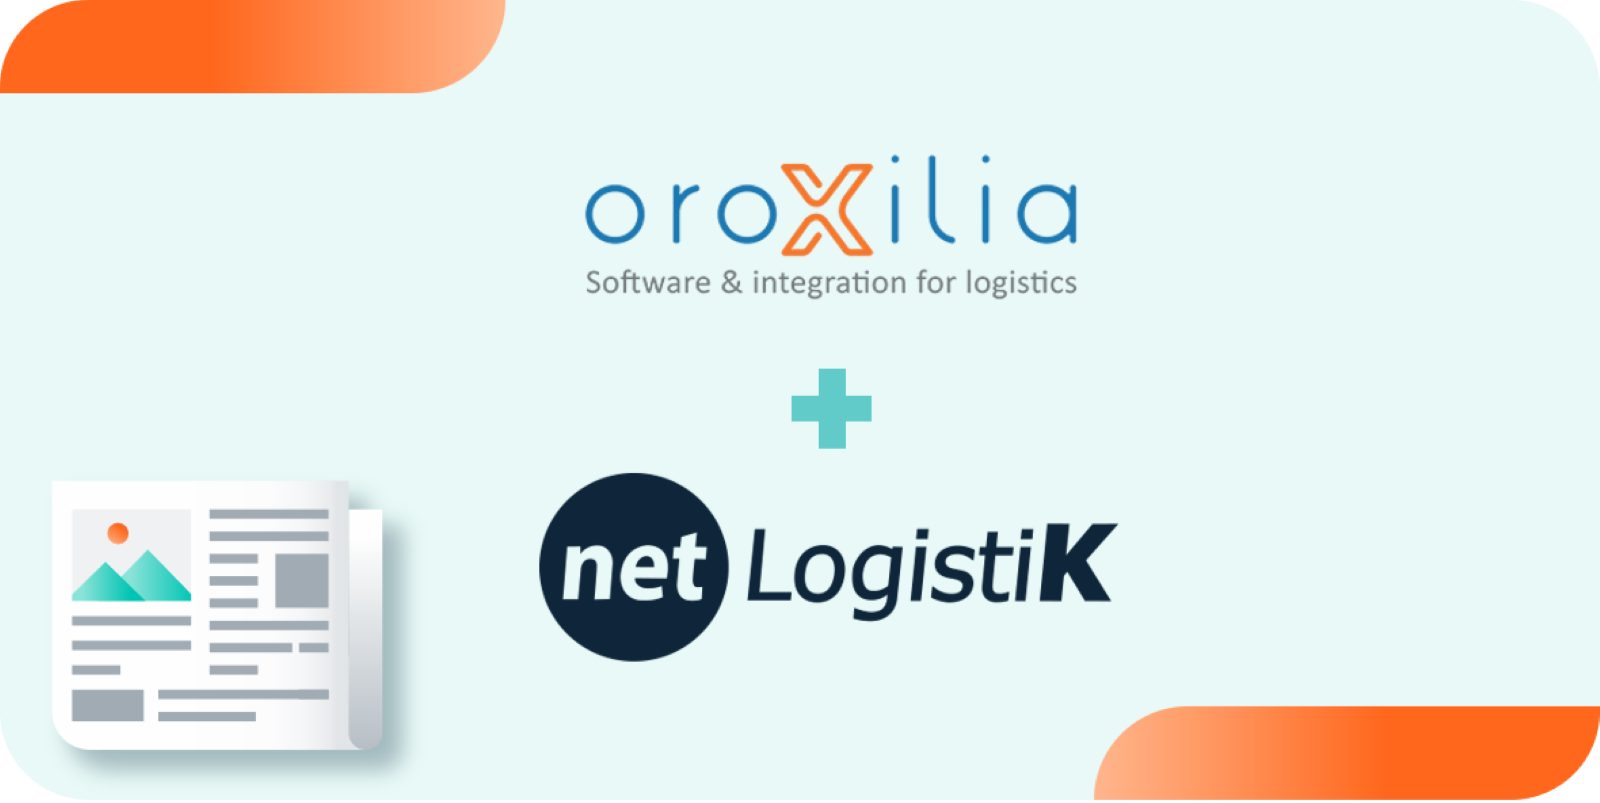 Netlogistik and Oroxilia announce strategic partnership